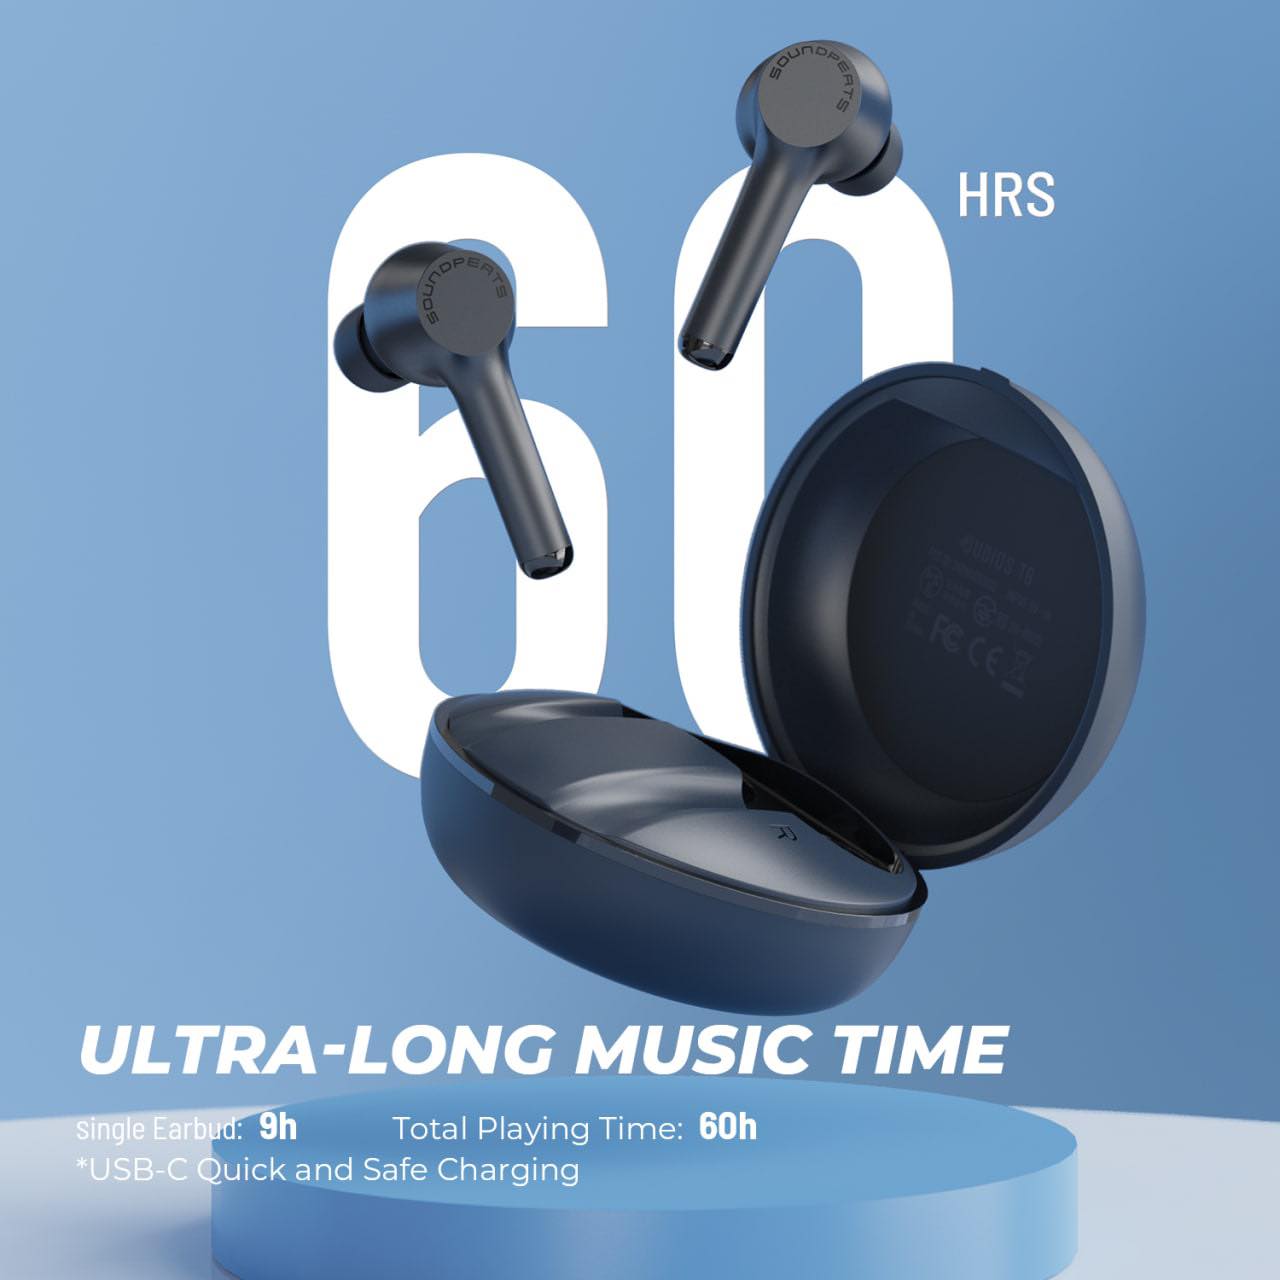 Original SoundPeats Mac New model bluetooth 5.0 earphone wireless earbuds IPX7 waterproof headsets highest quality sound